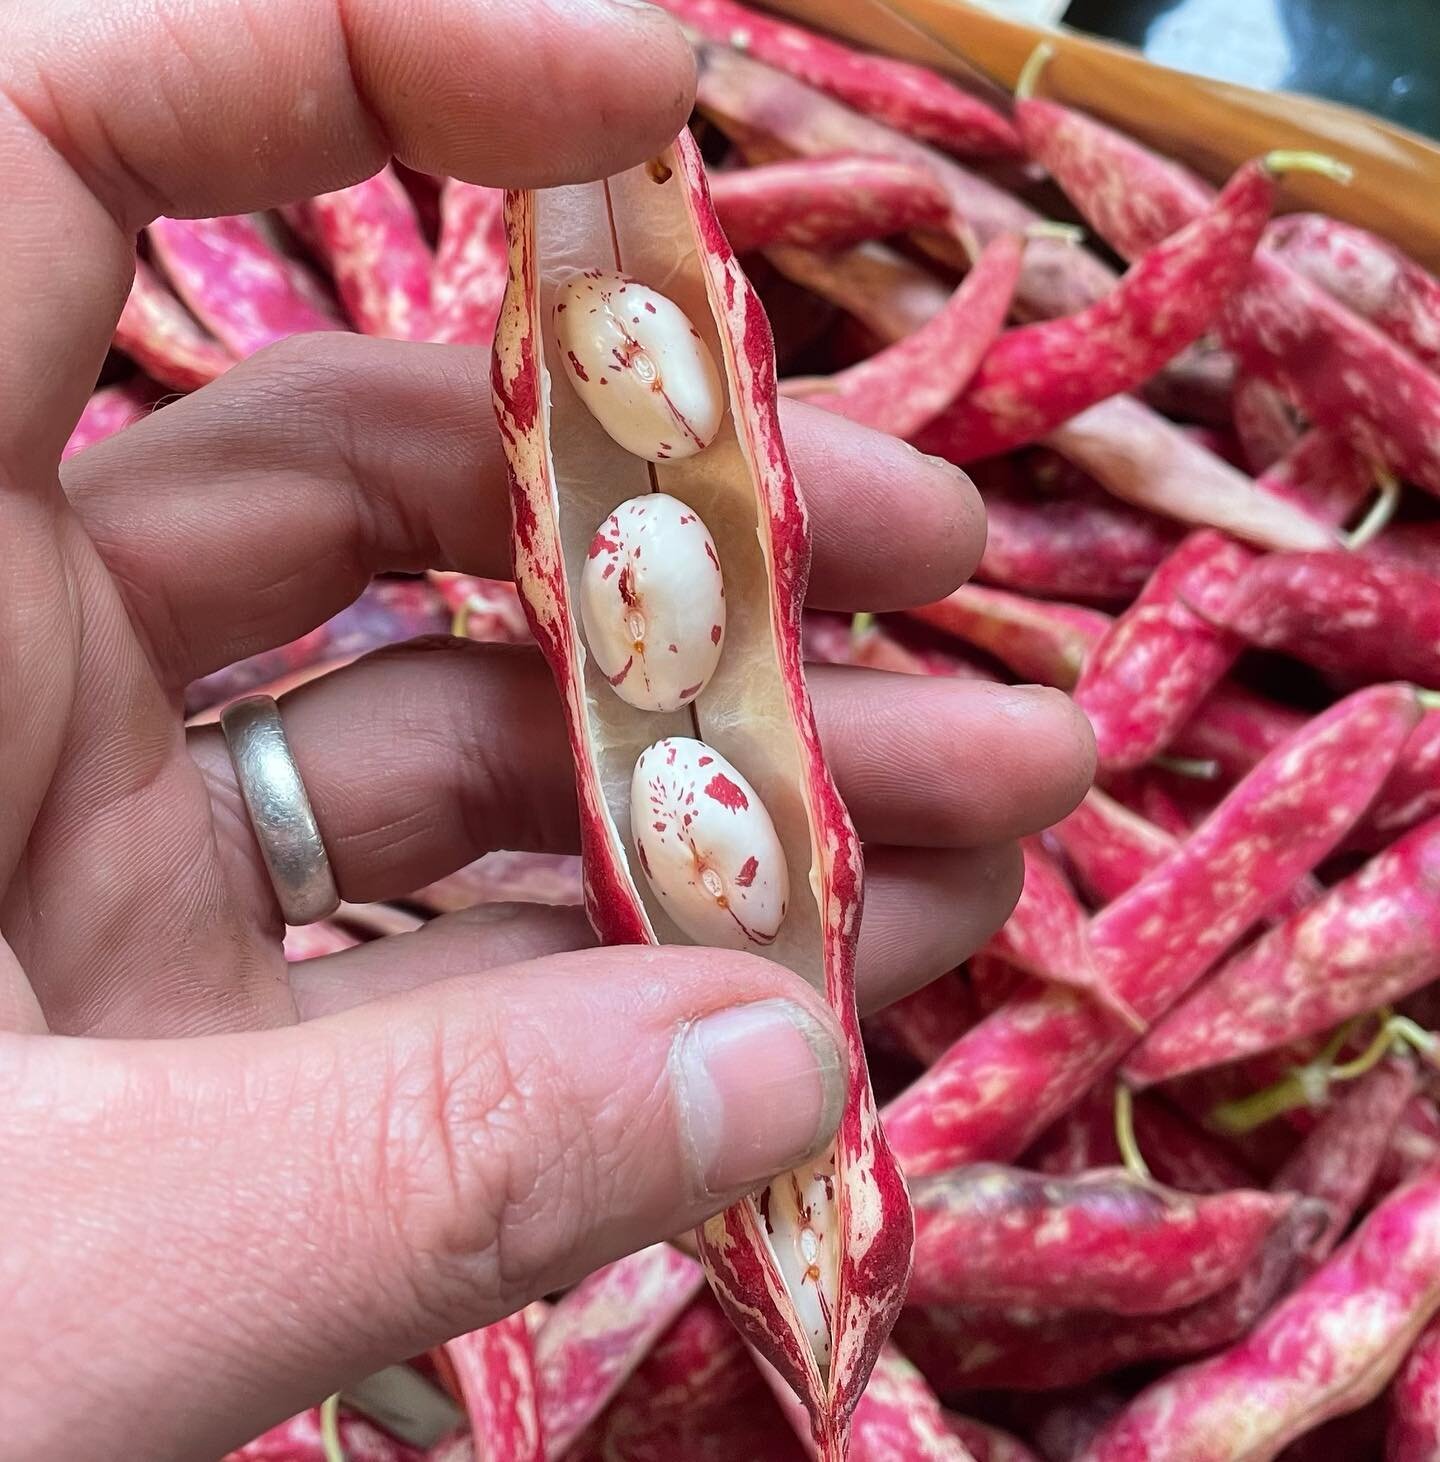 Beautiful Borlotti beans available in small quantities @annevillefarm